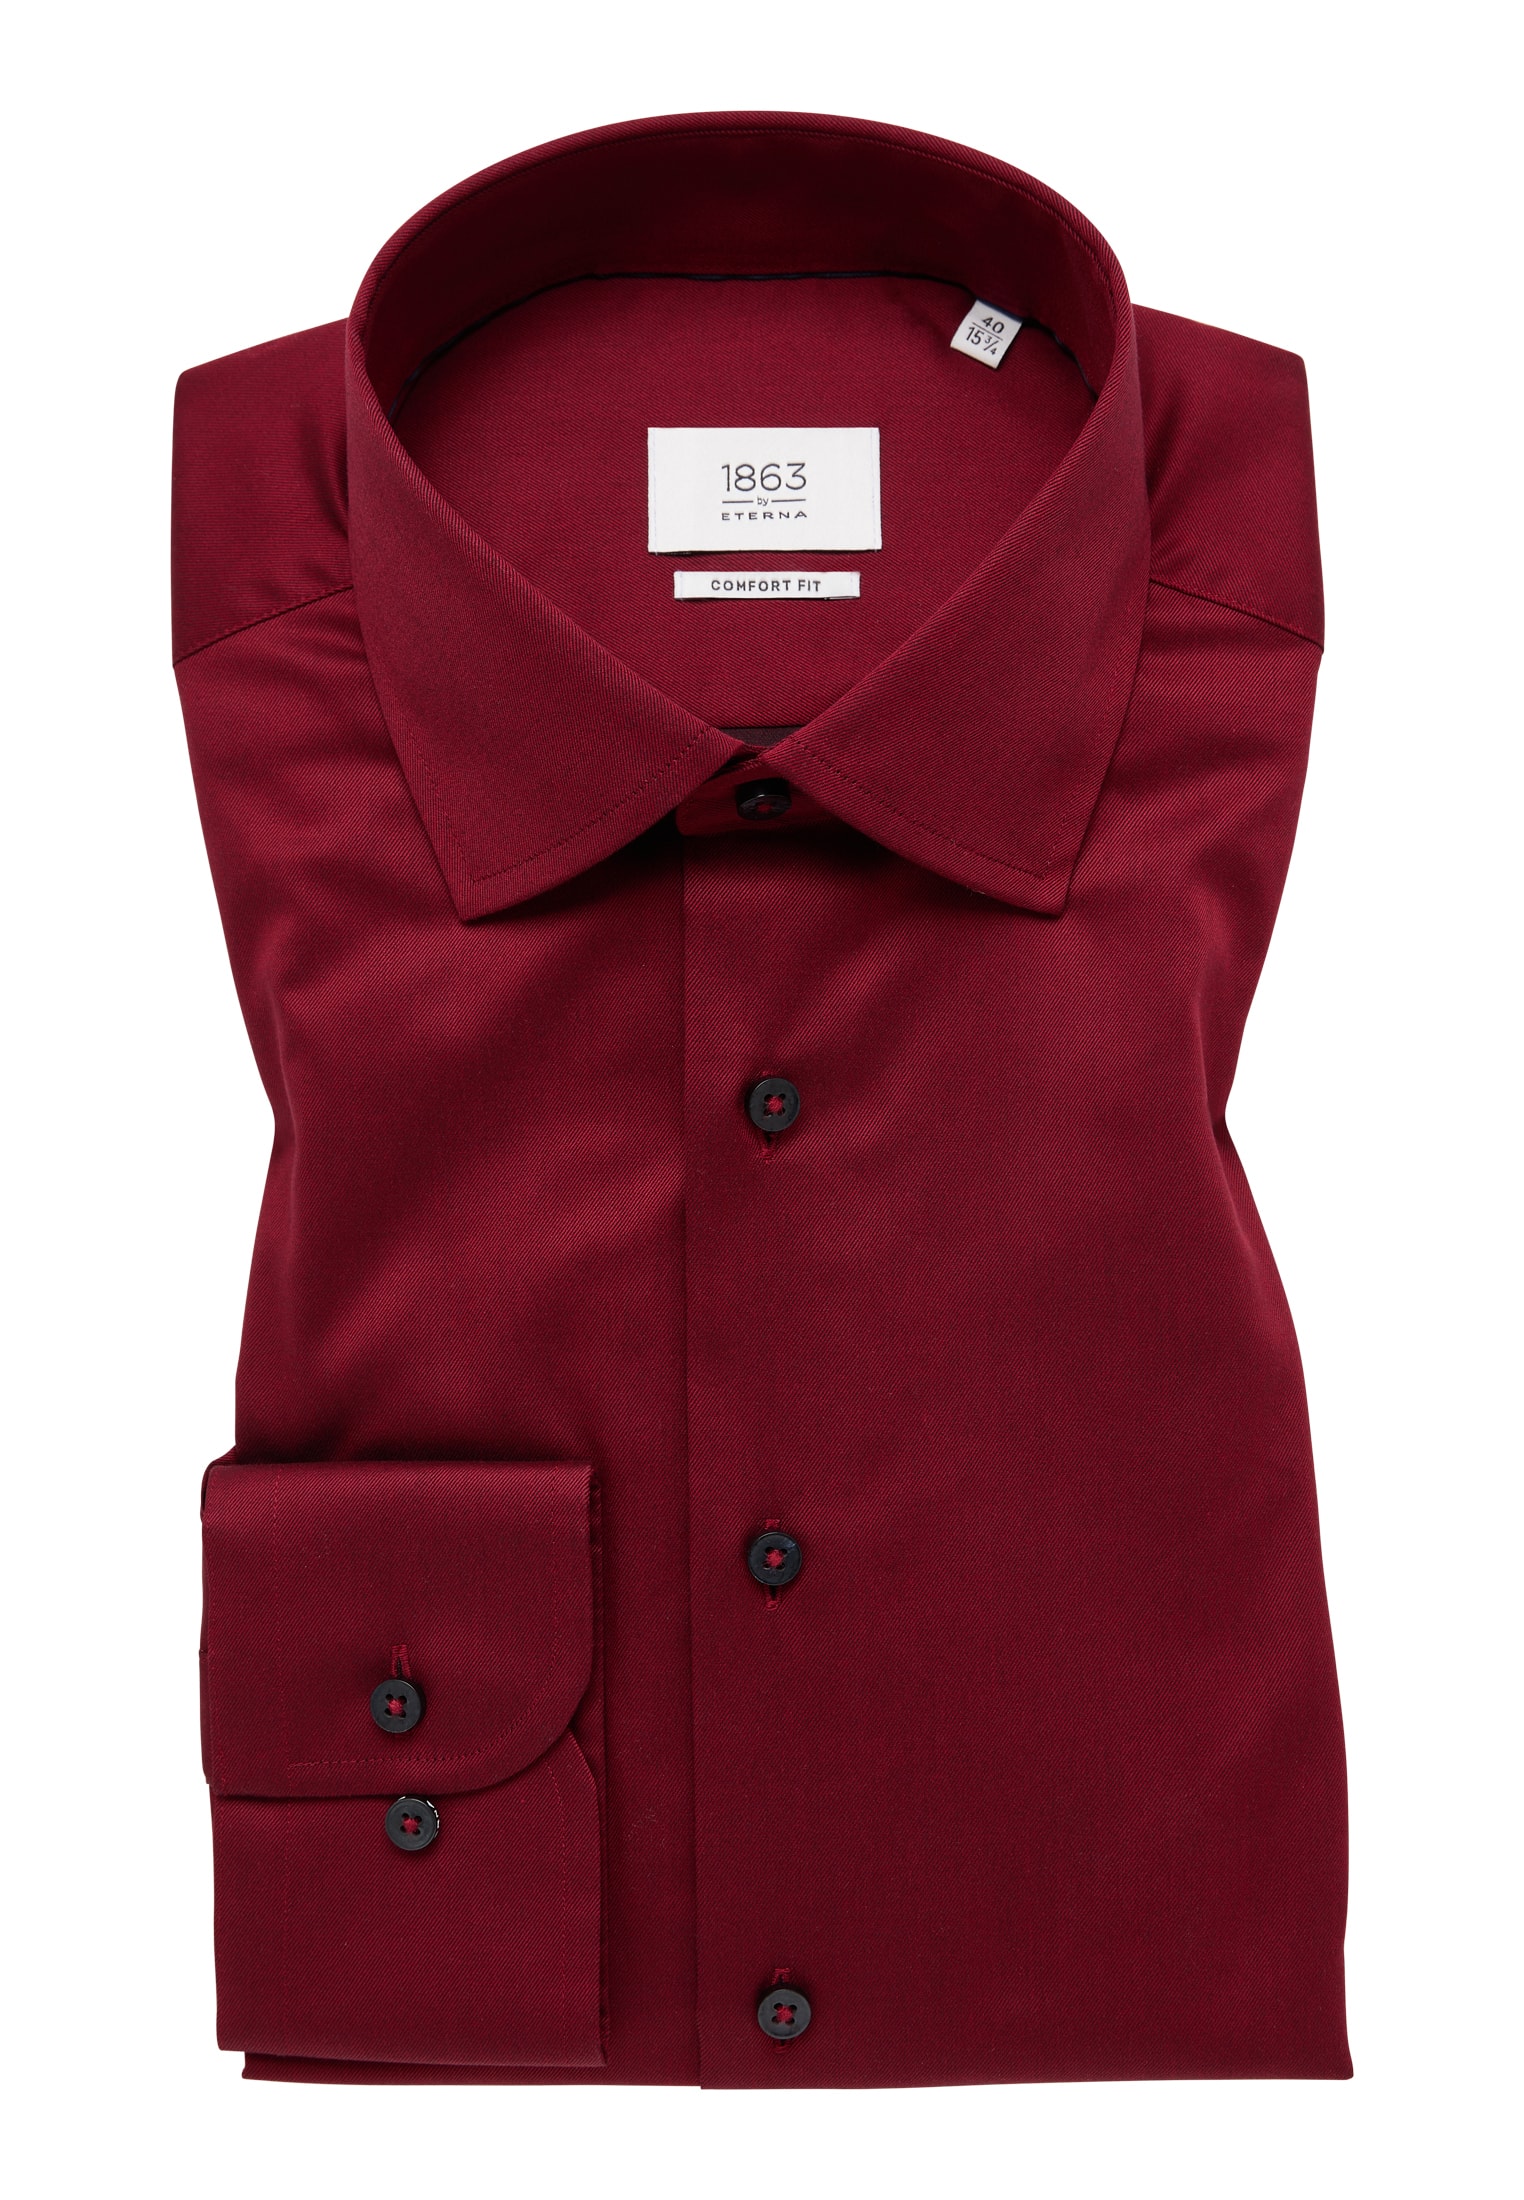 COMFORT FIT Luxury rubinrot rubinrot 43 1SH00739-05-51-43-1/1 in unifarben | | | | Langarm Shirt